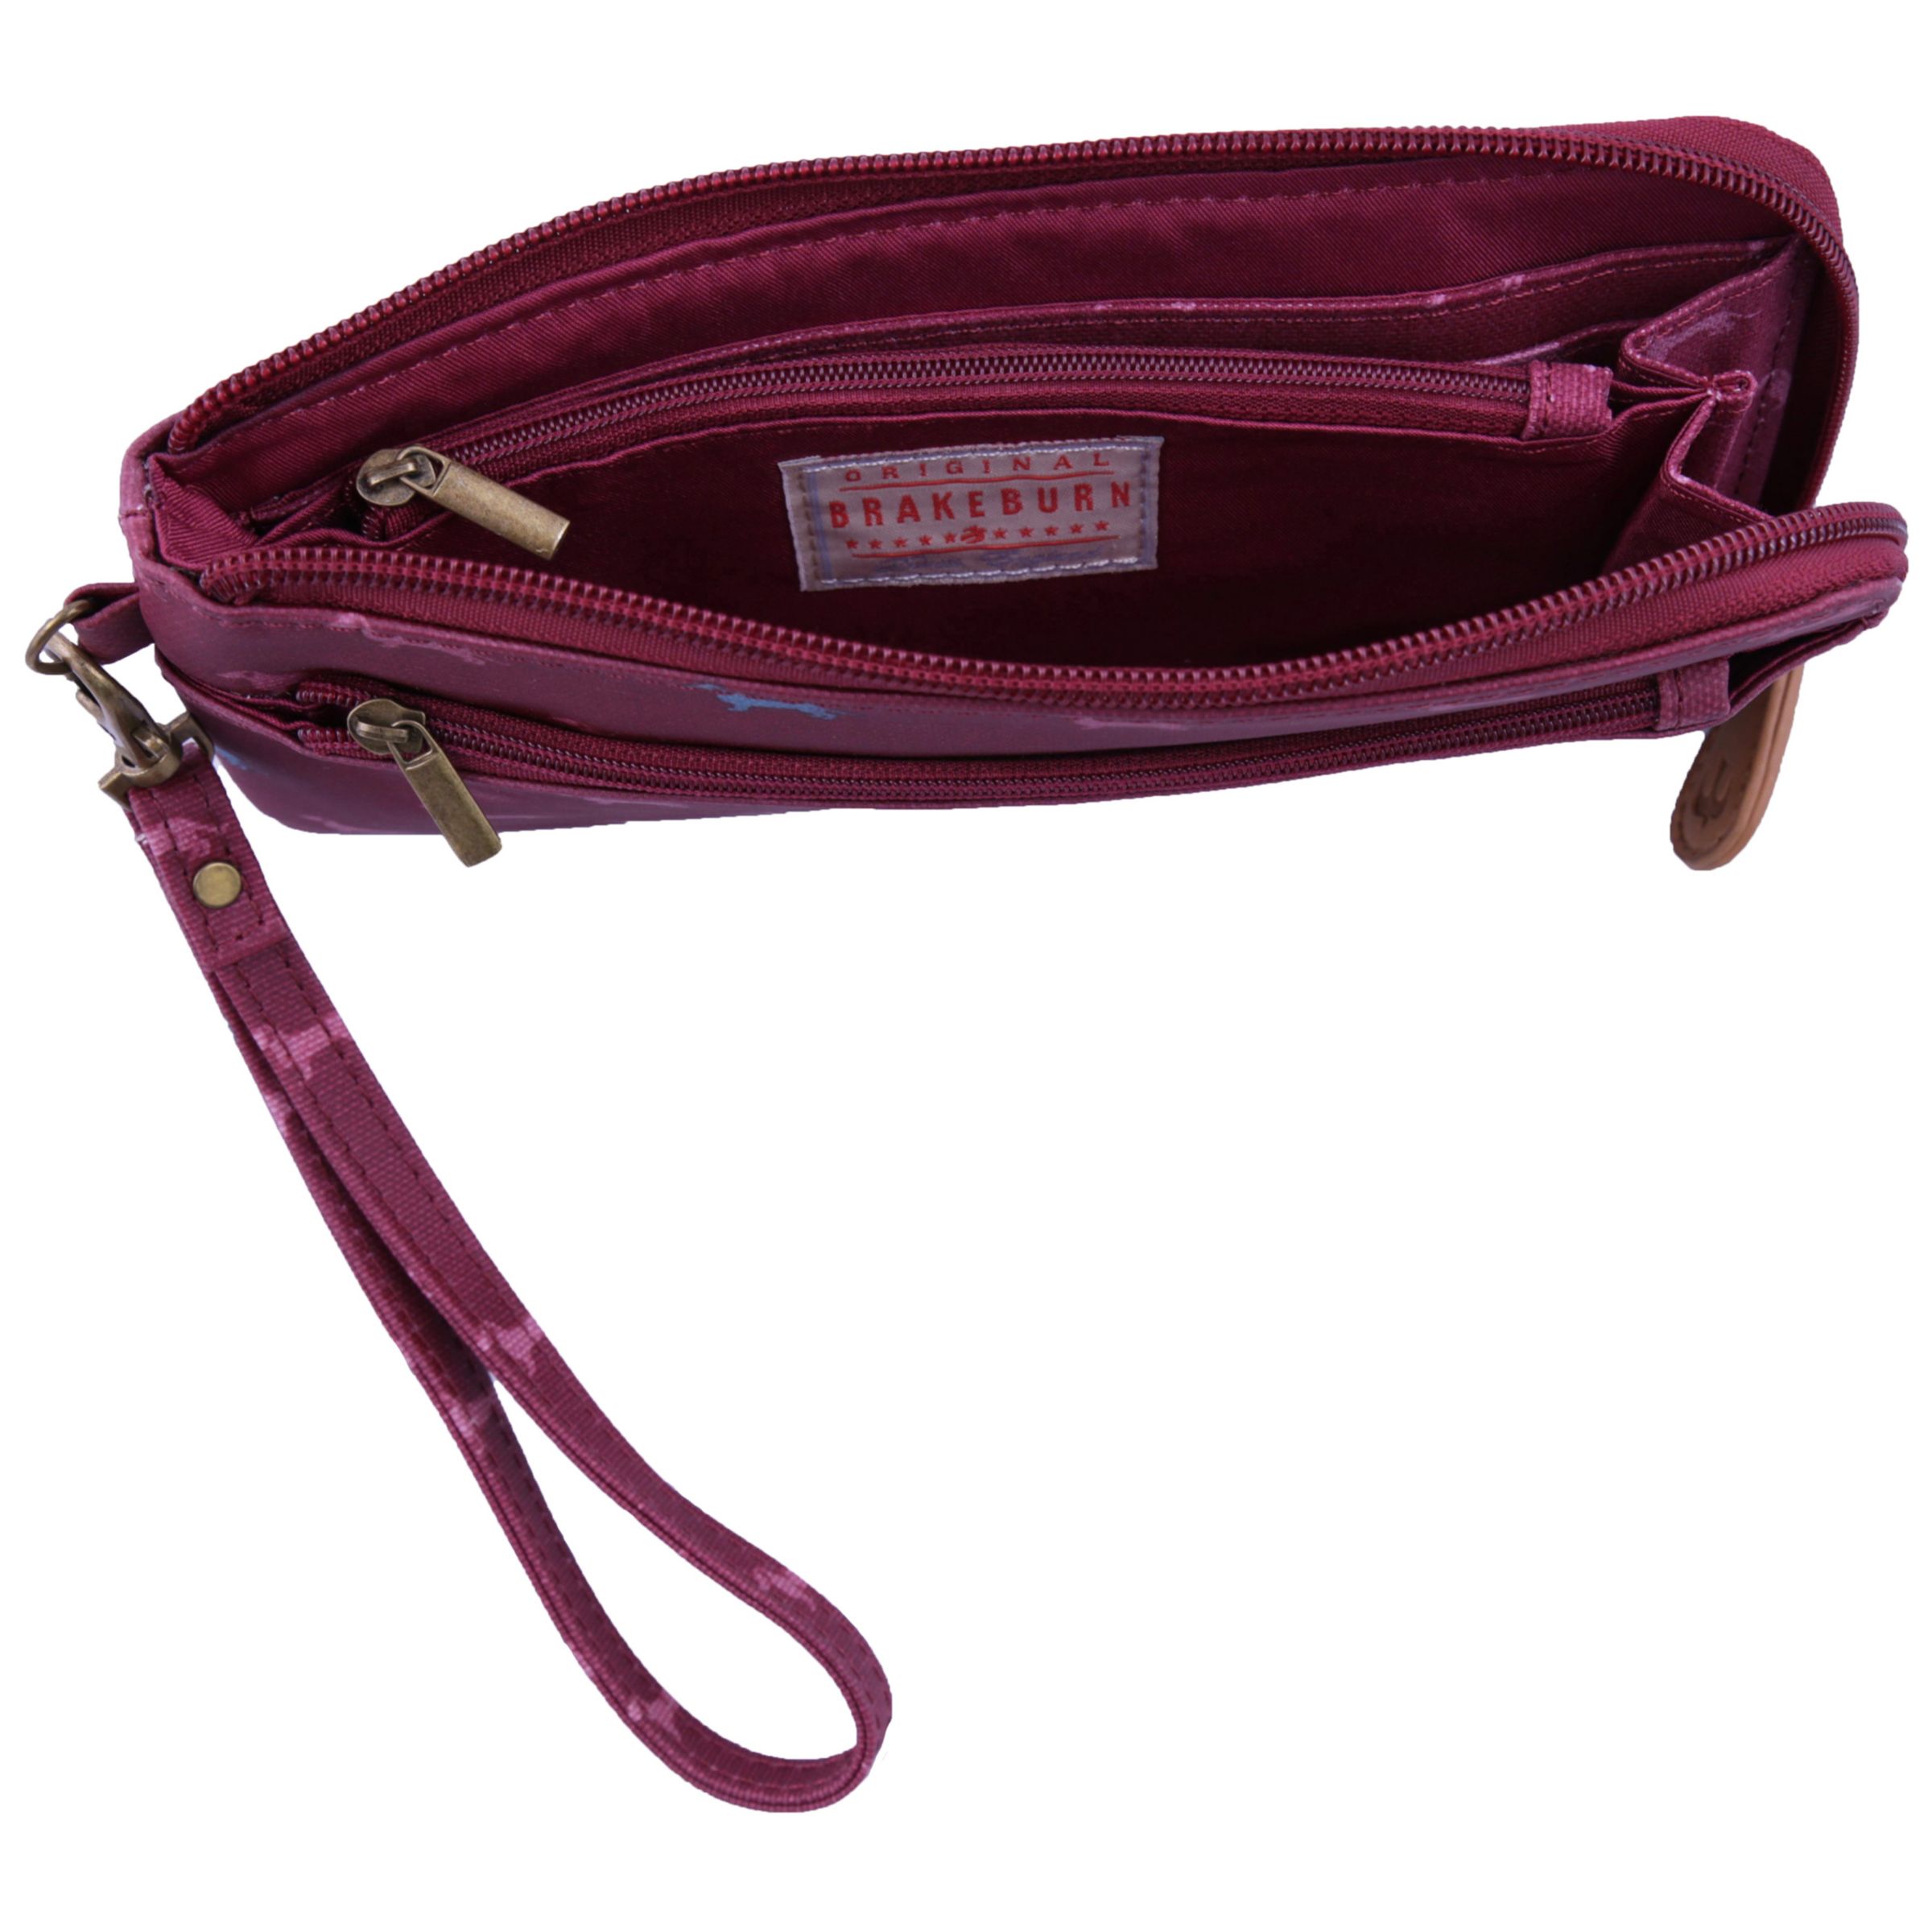 burgundy clutch purse